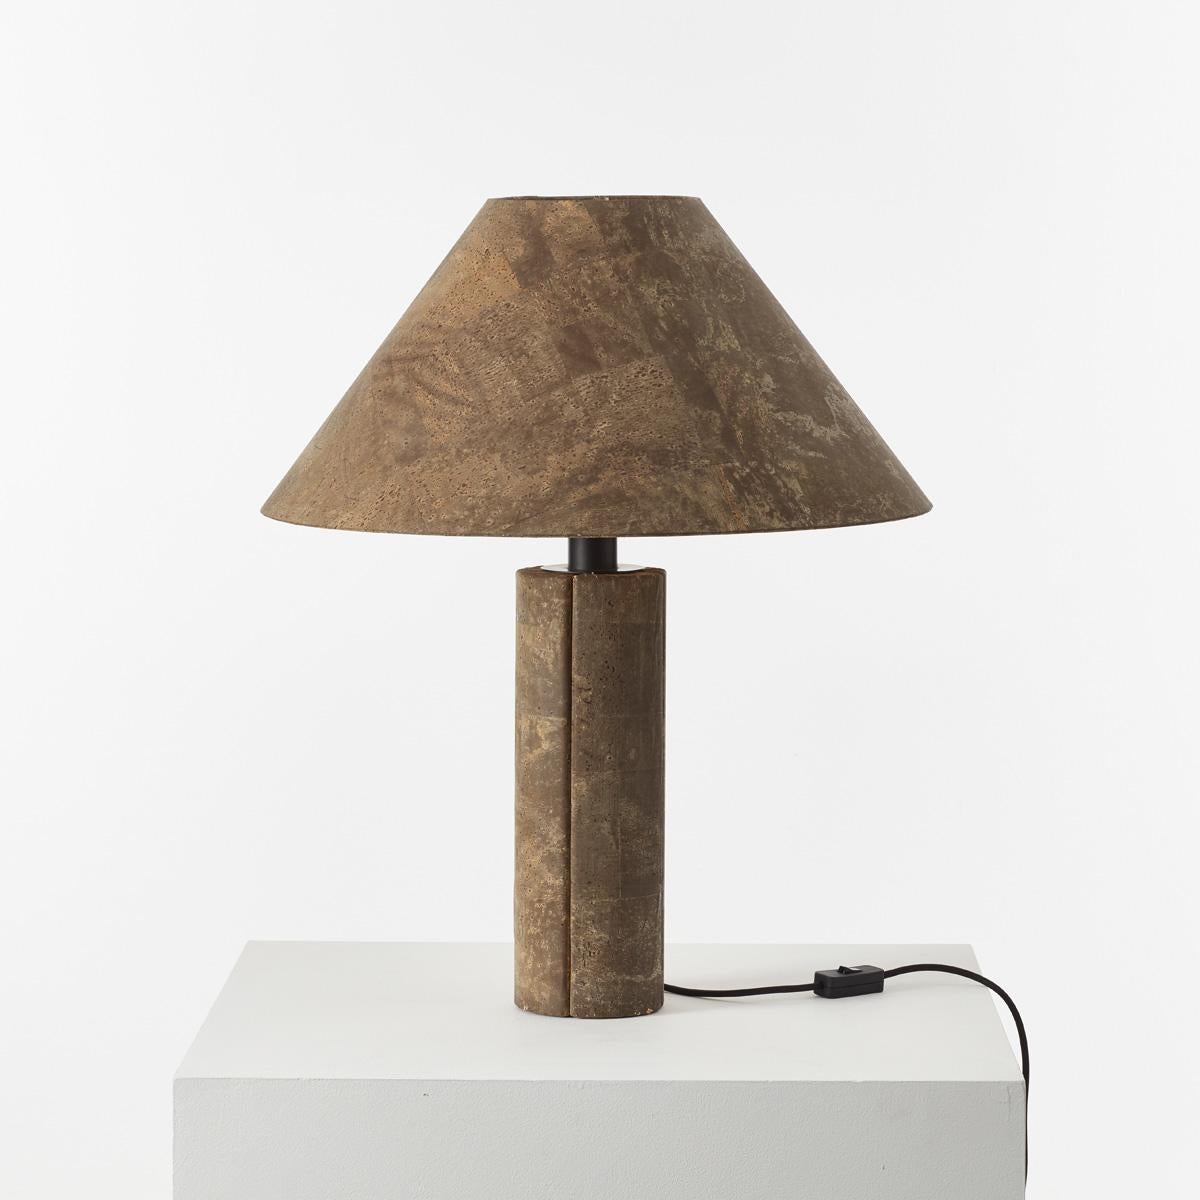 Post-Modern Ingo Maurer Cork Lamp for Design M, Germany 1974. Pair available.  For Sale